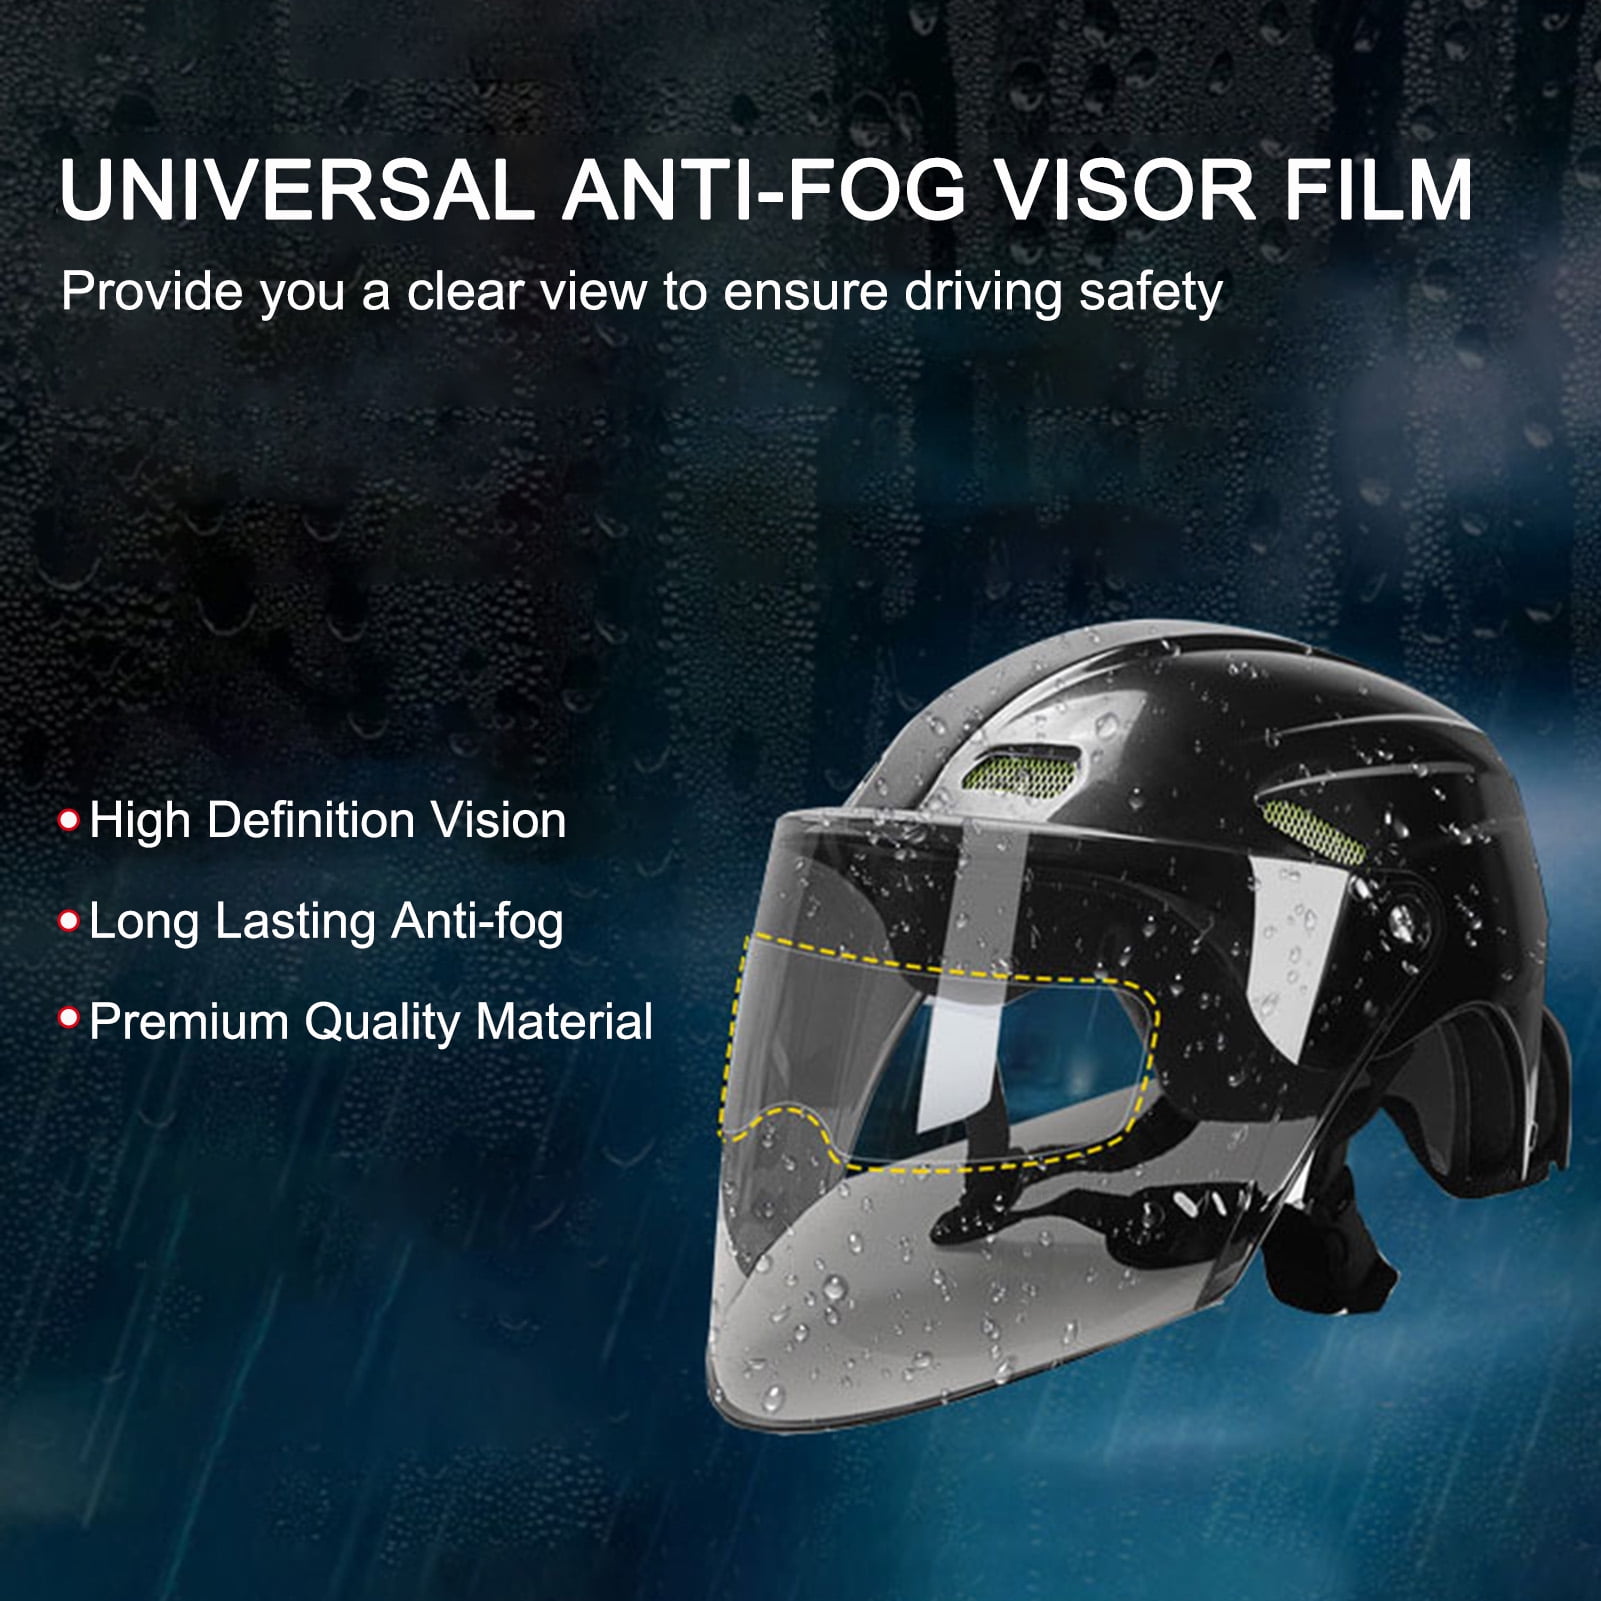 Rainproof and Anti-Fog Film for Motorcycle Helmets Lens Stickers Rainproof and Anti-Fog Film General-Purpose Riding Helmet